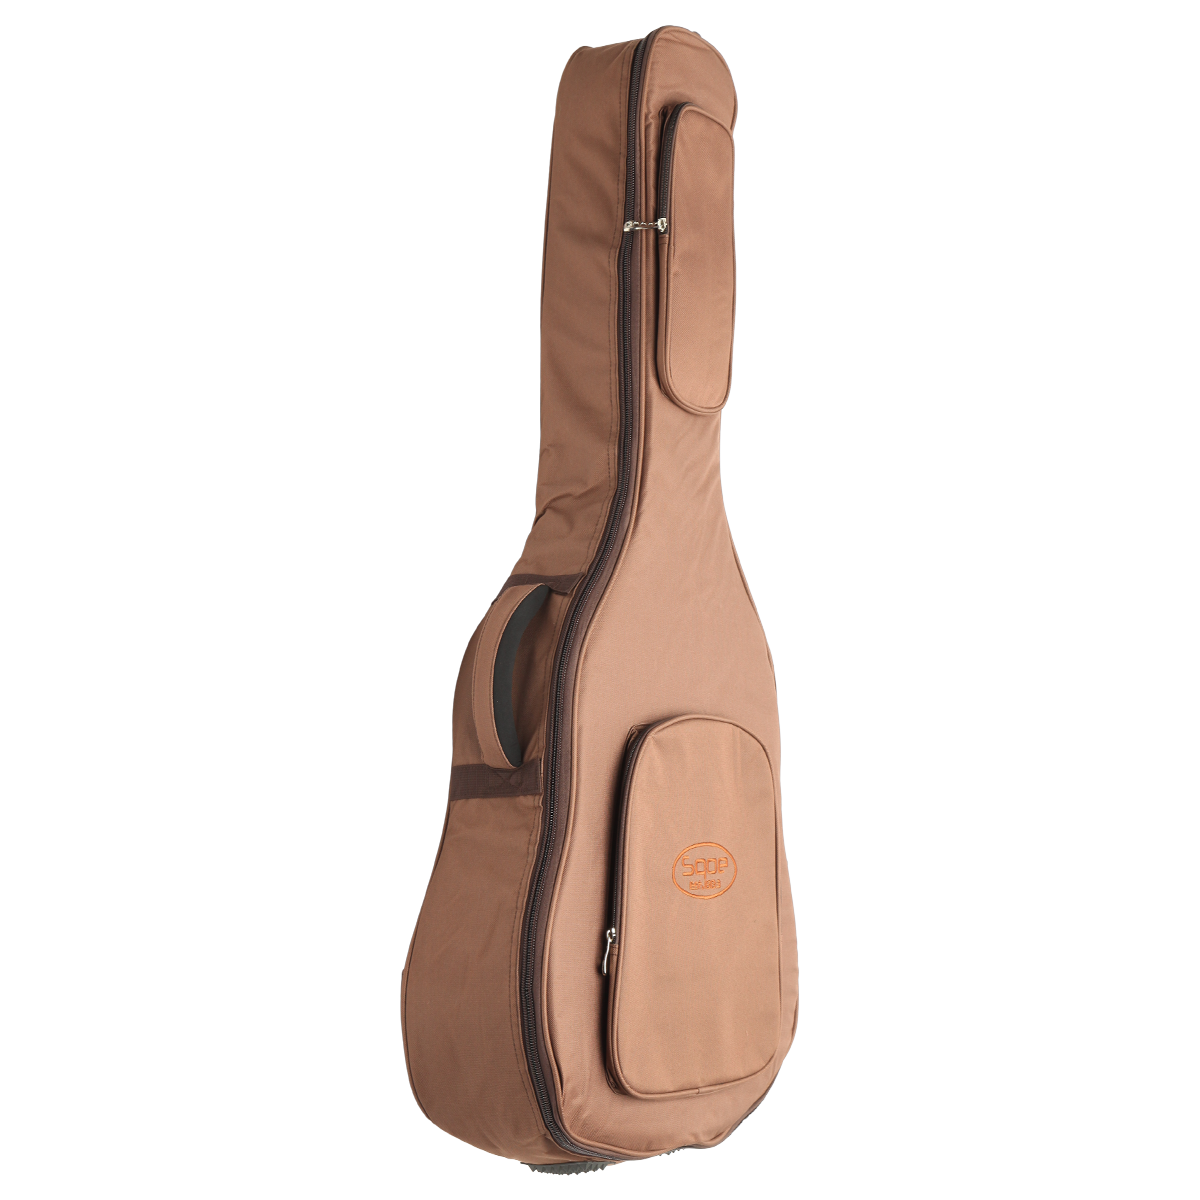 SQOE Qb-mb-25mm-41 brown Чехол для акустической гитары 41'' с утеплителем 25мм